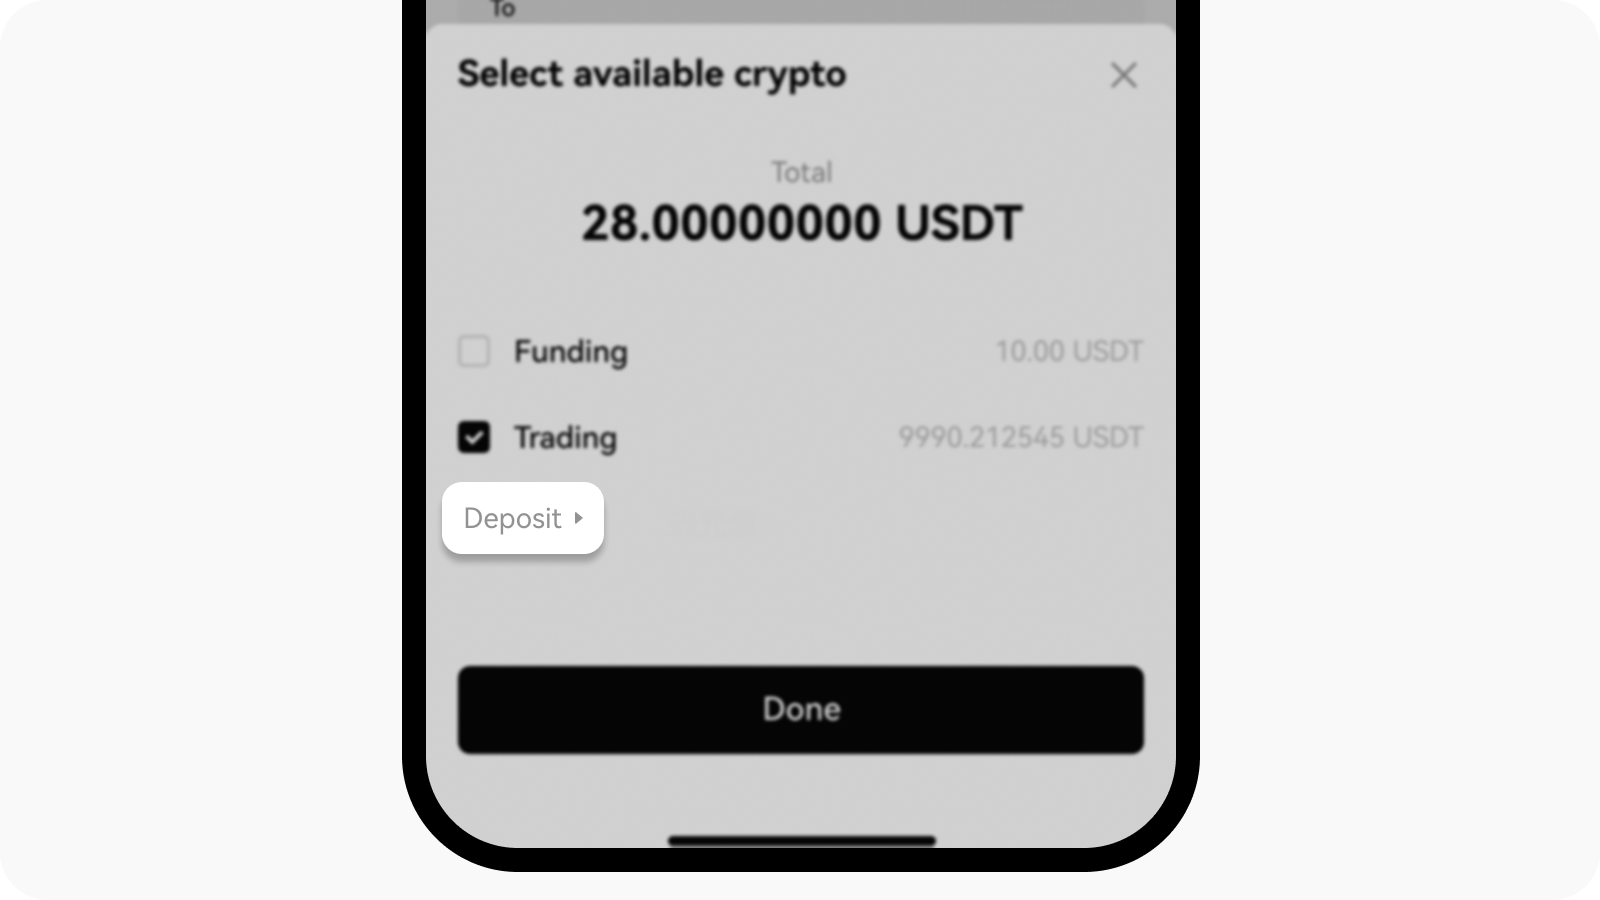 CT-app-deposit crypto to complete convert